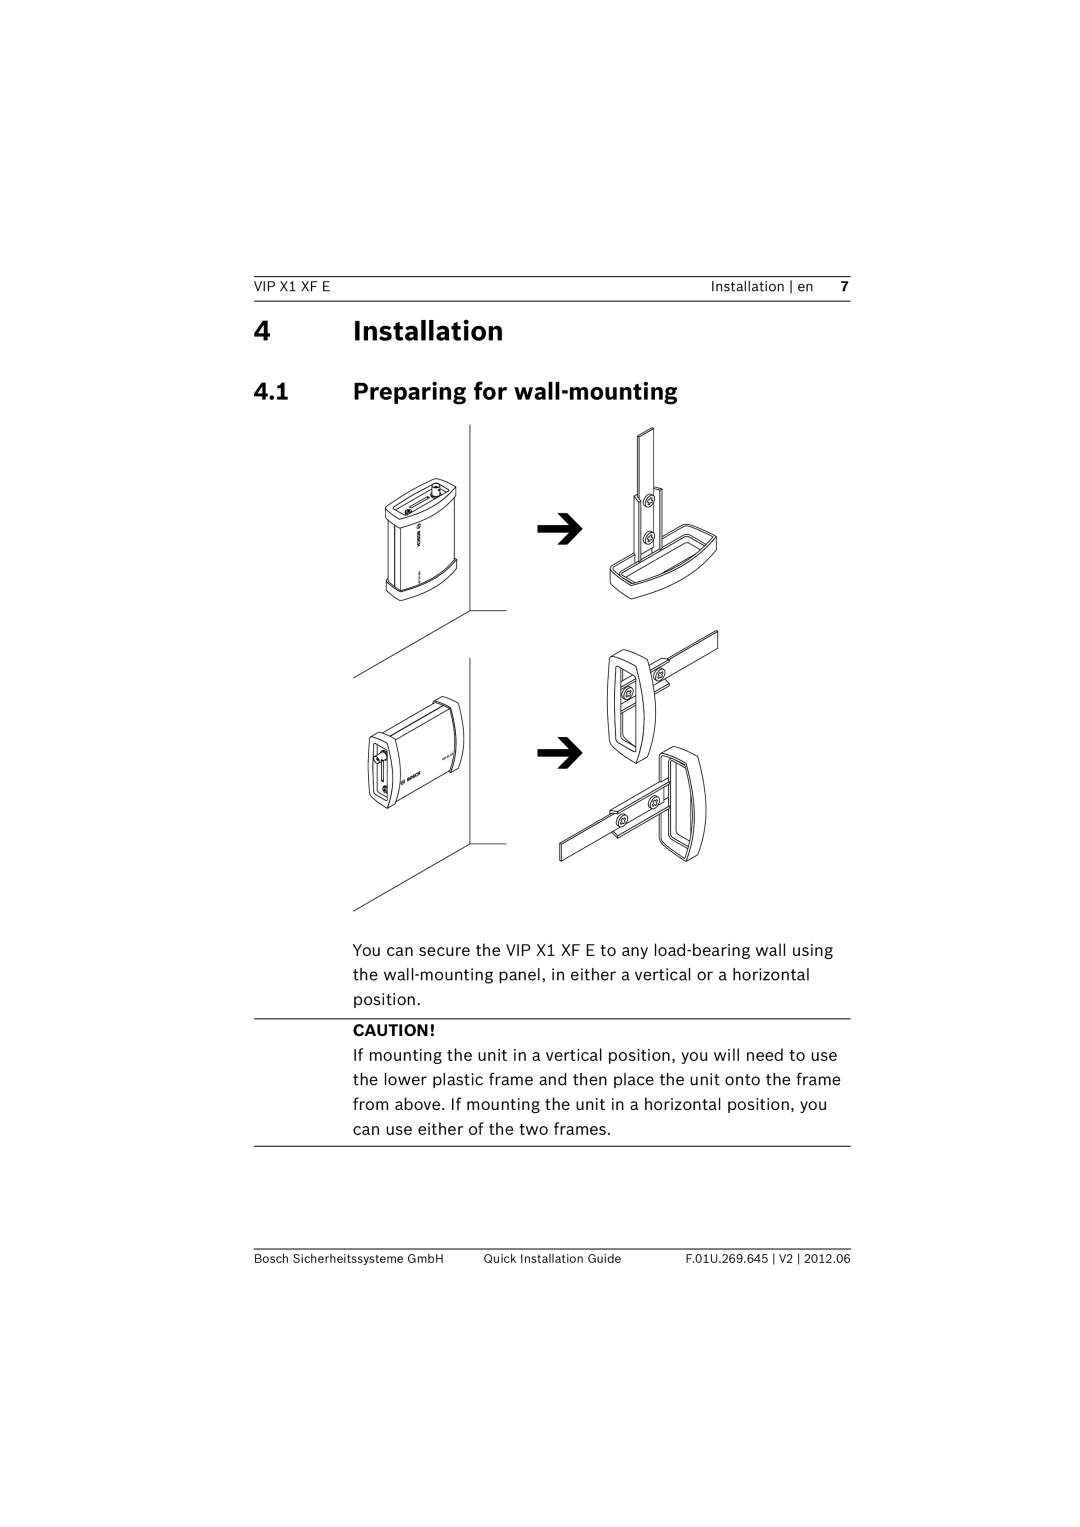 Bosch Appliances VIP X1 XF E manual 4Installation, 4.1Preparing for wall-mounting 